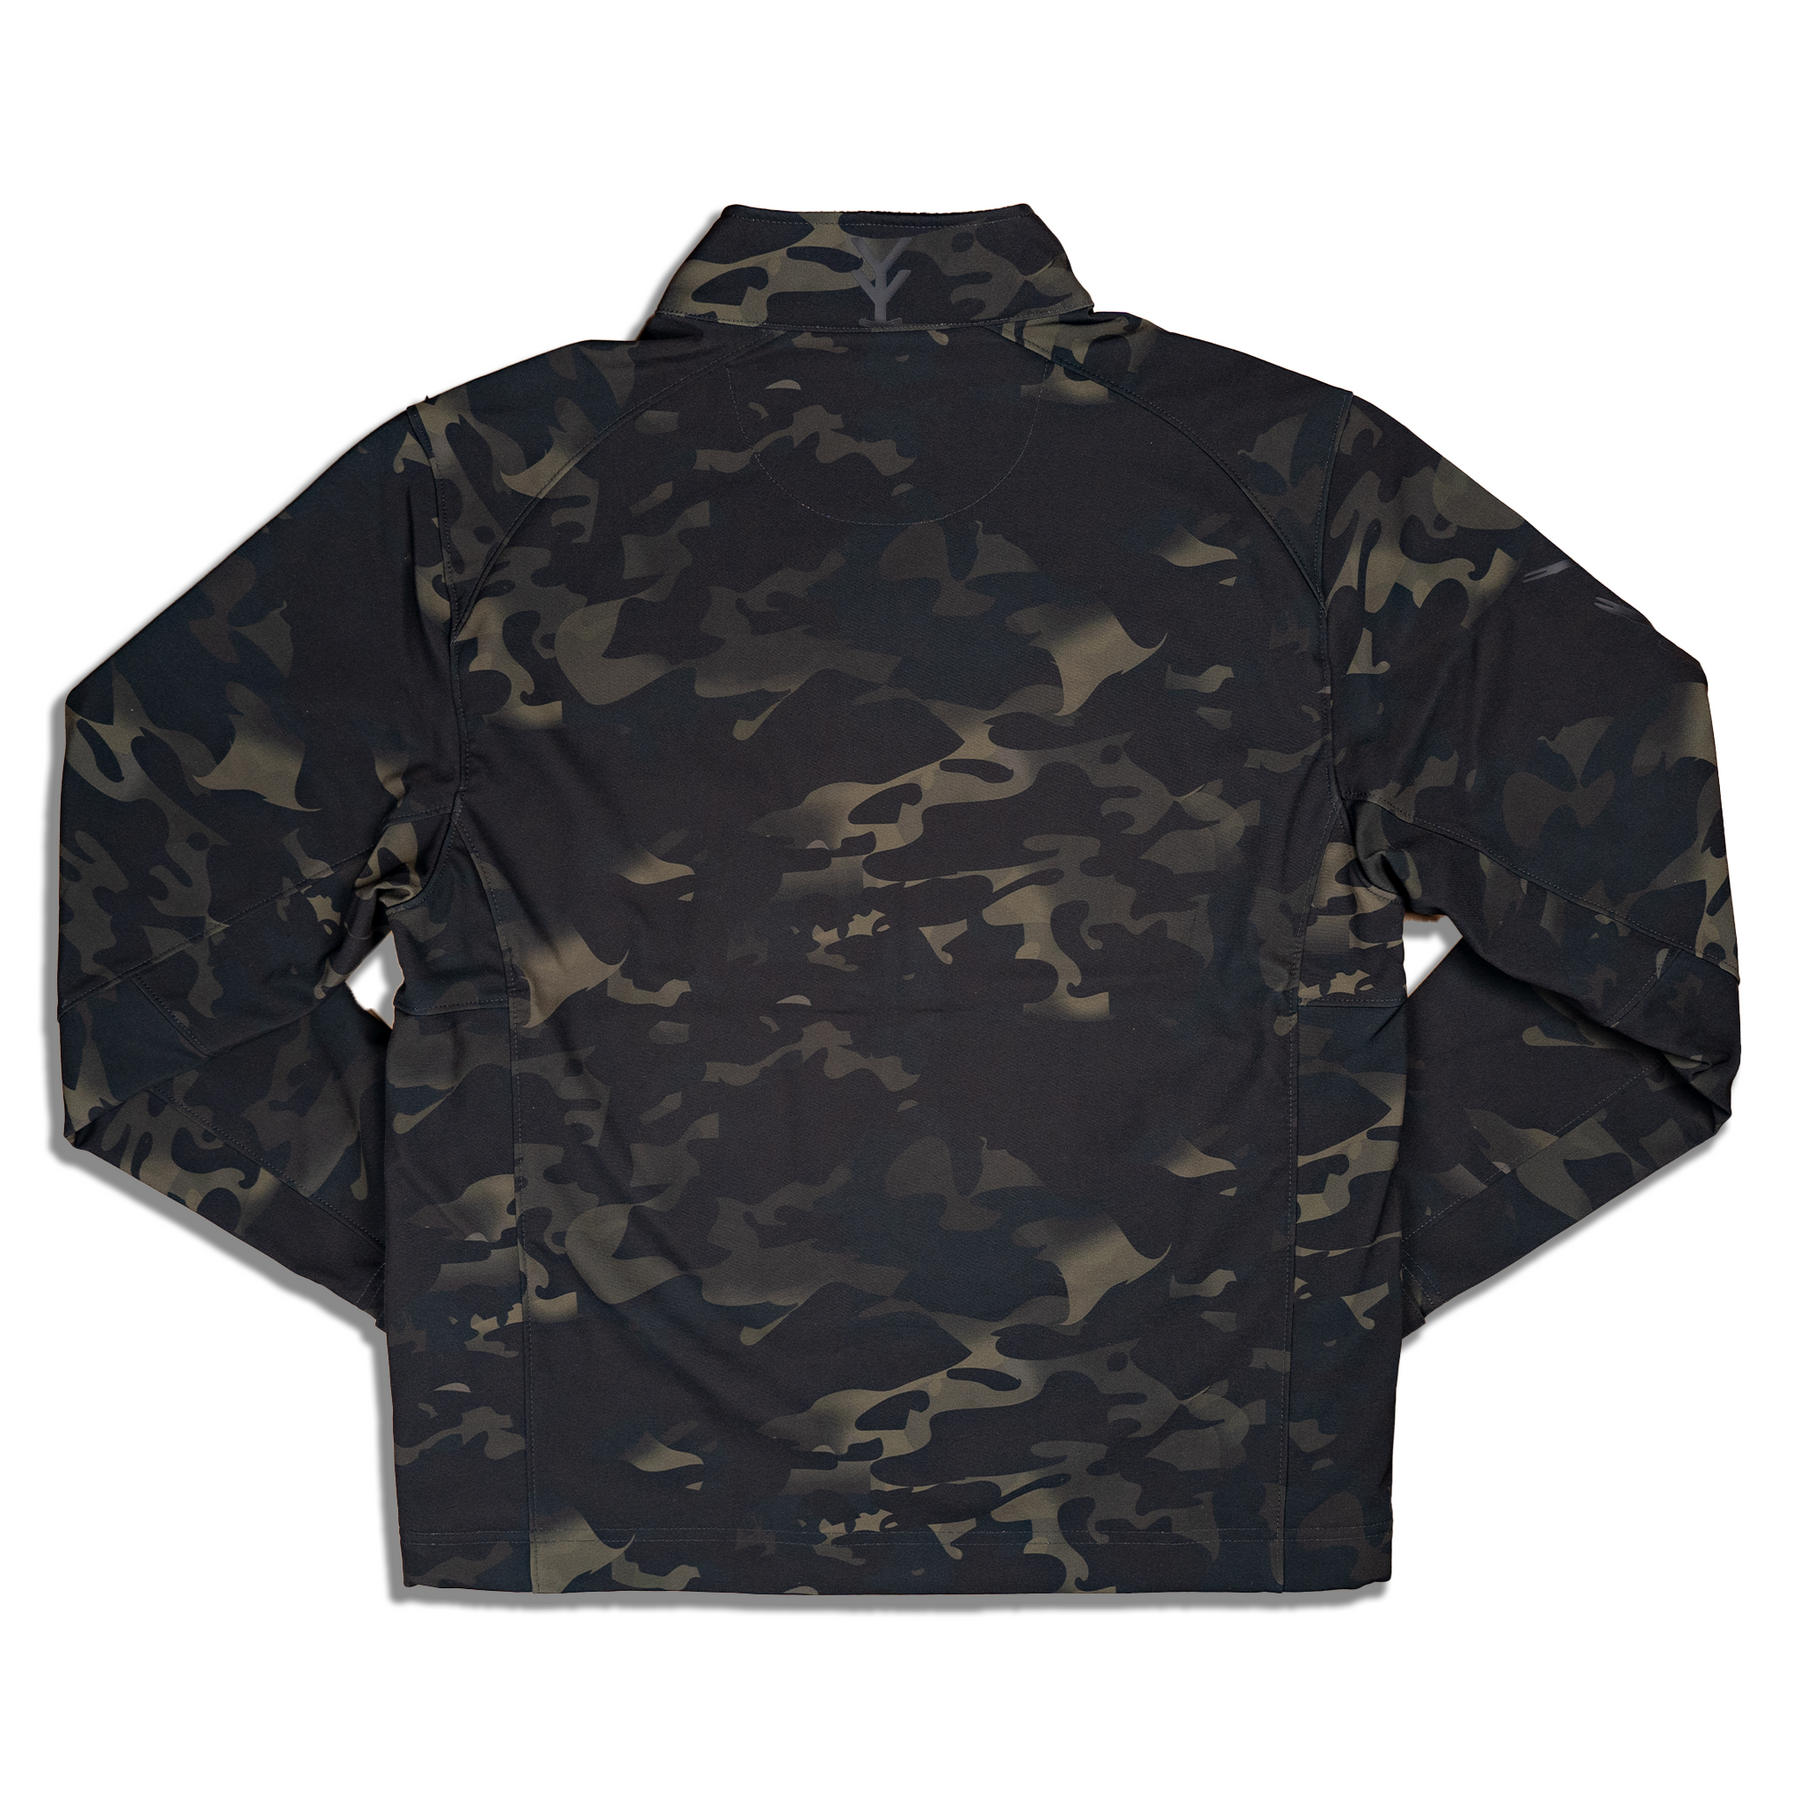 Black Camo Soft – Shell Jacket Apparel Yee Yee